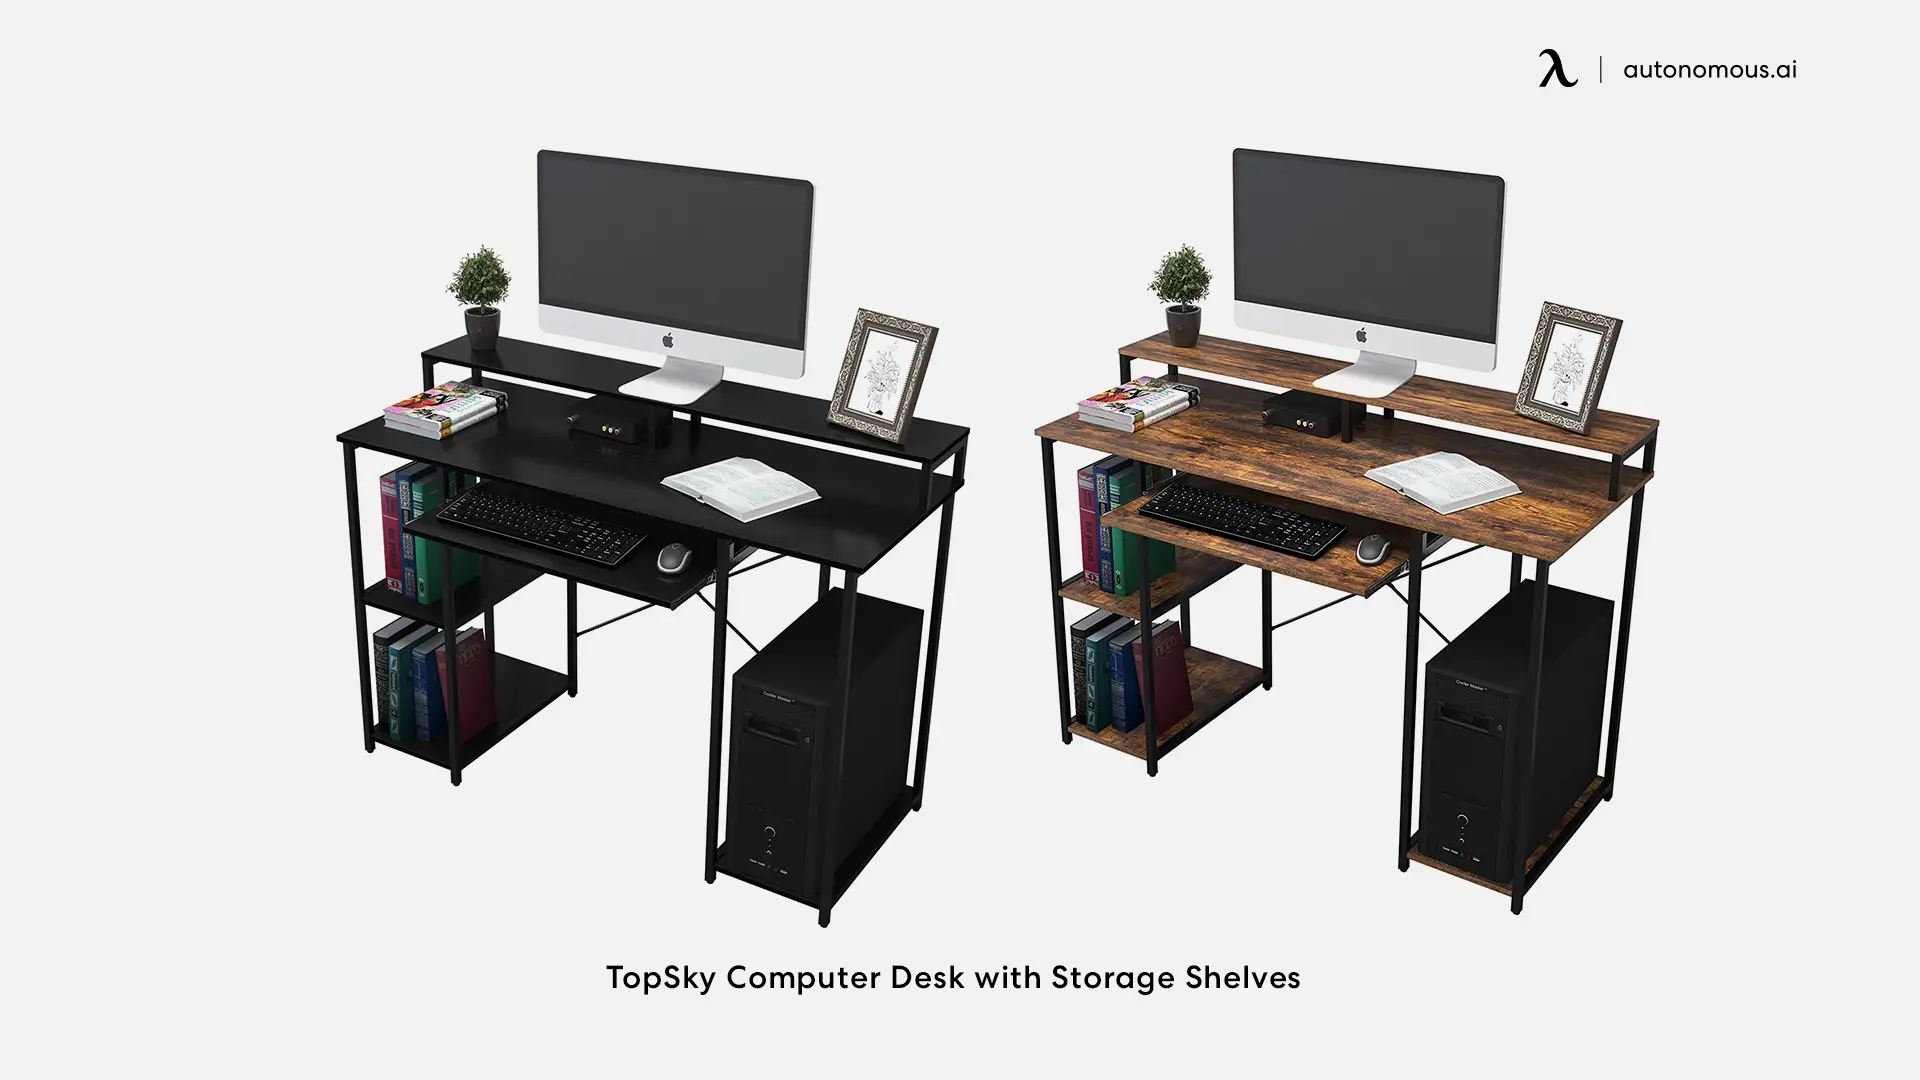 TopSky Computer Desk with Storage Shelves